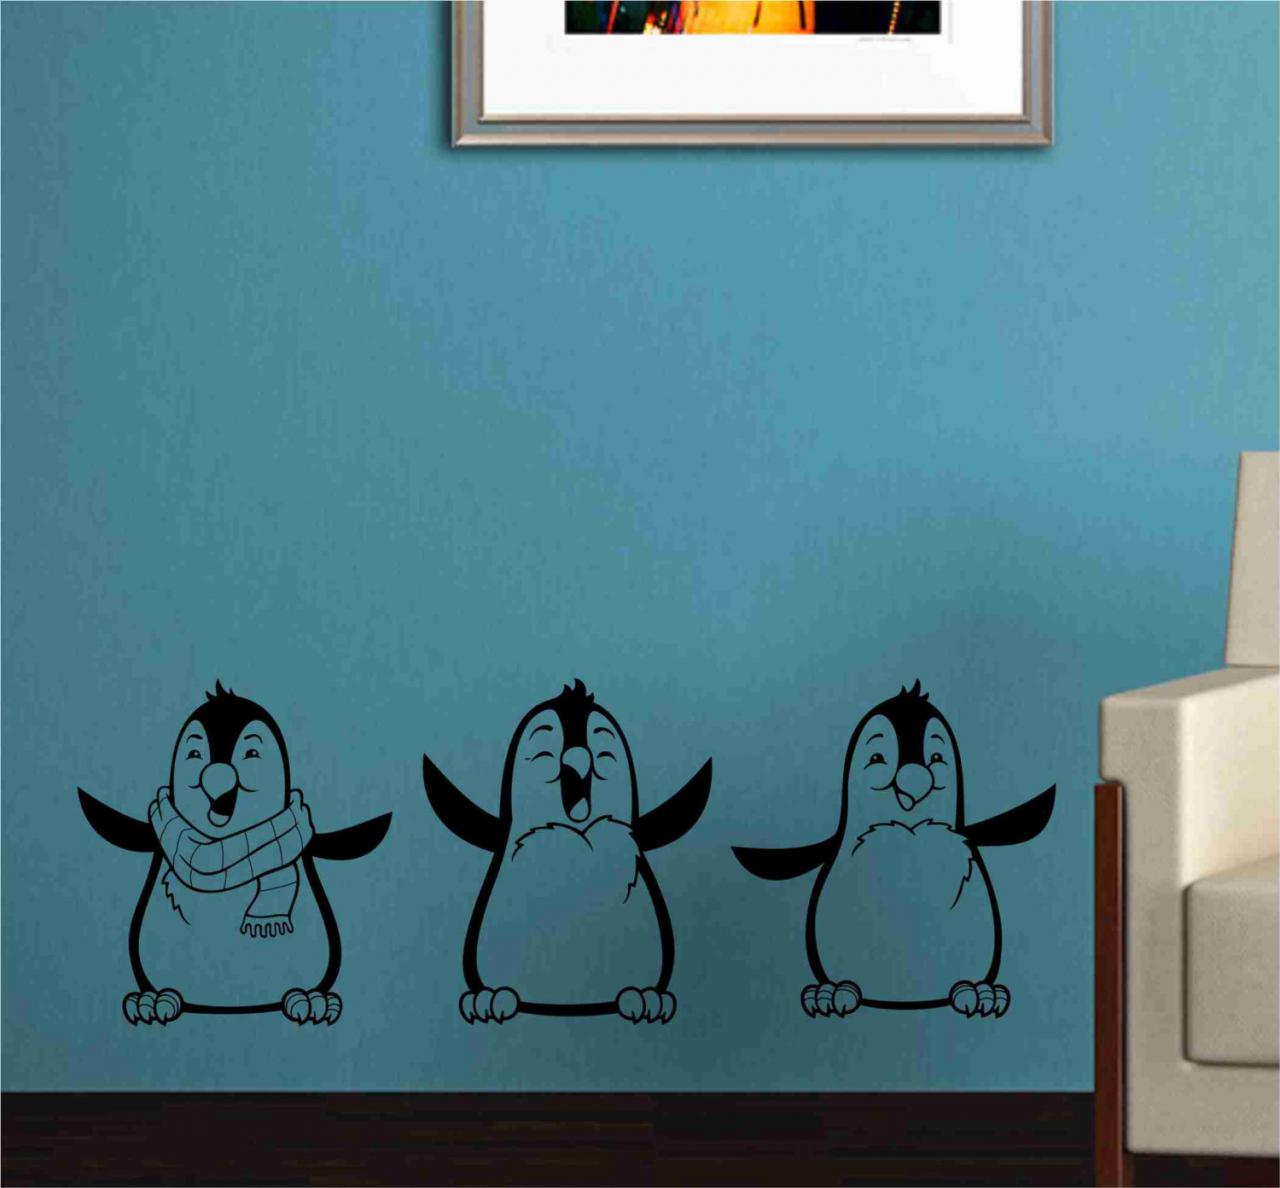 Three Penguins Decal Sticker Vinyl Wall Mural Nursery Modern Kids Decals Stickers